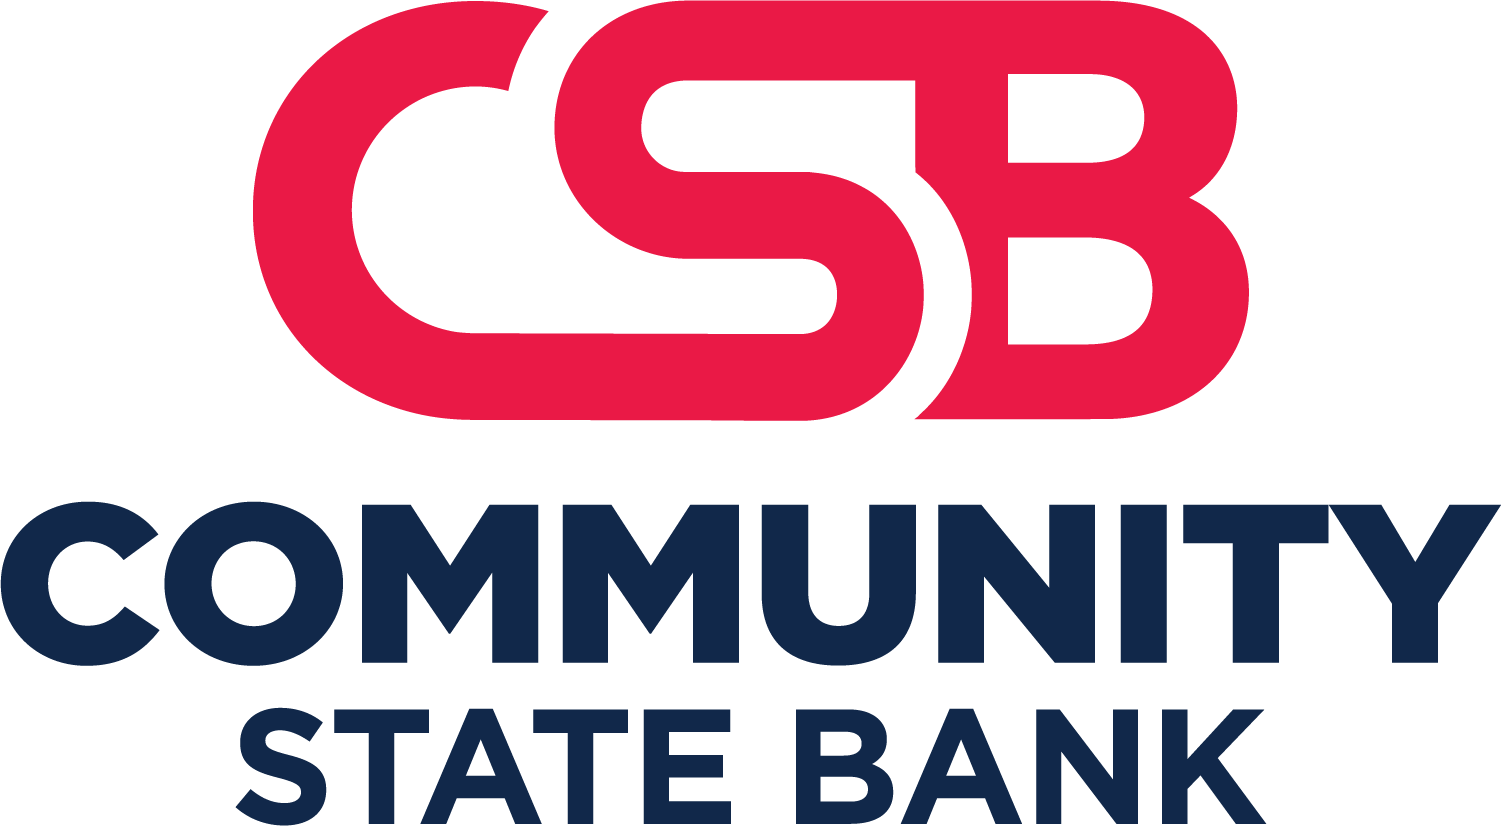 CSB Logo